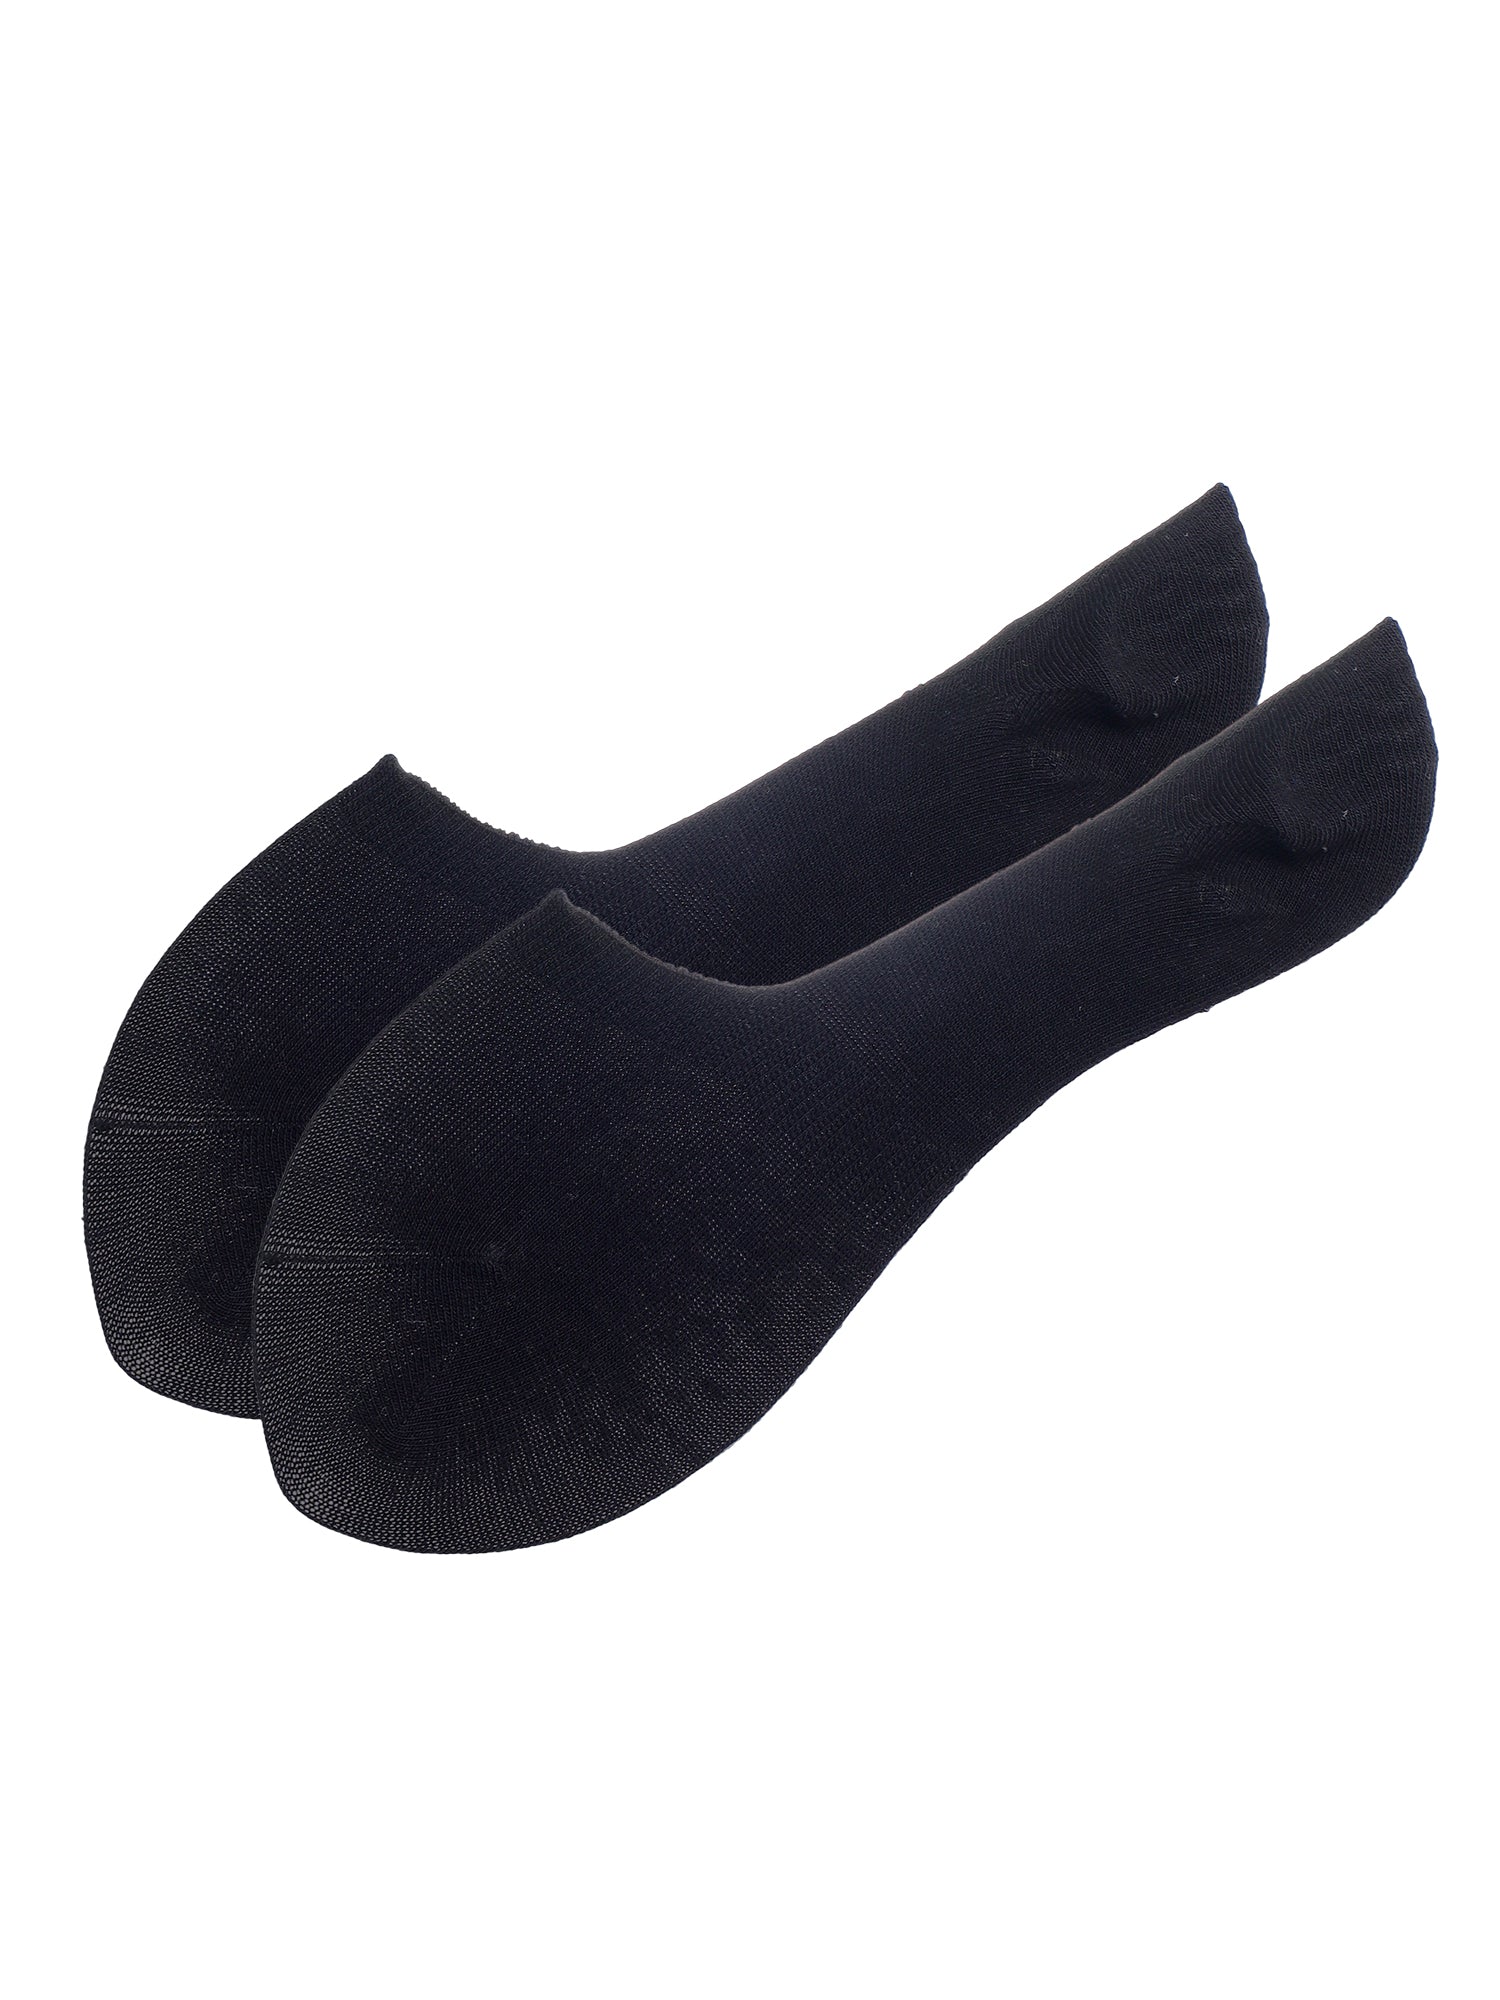 Black Solid Non-Slip No Show Socks For Women